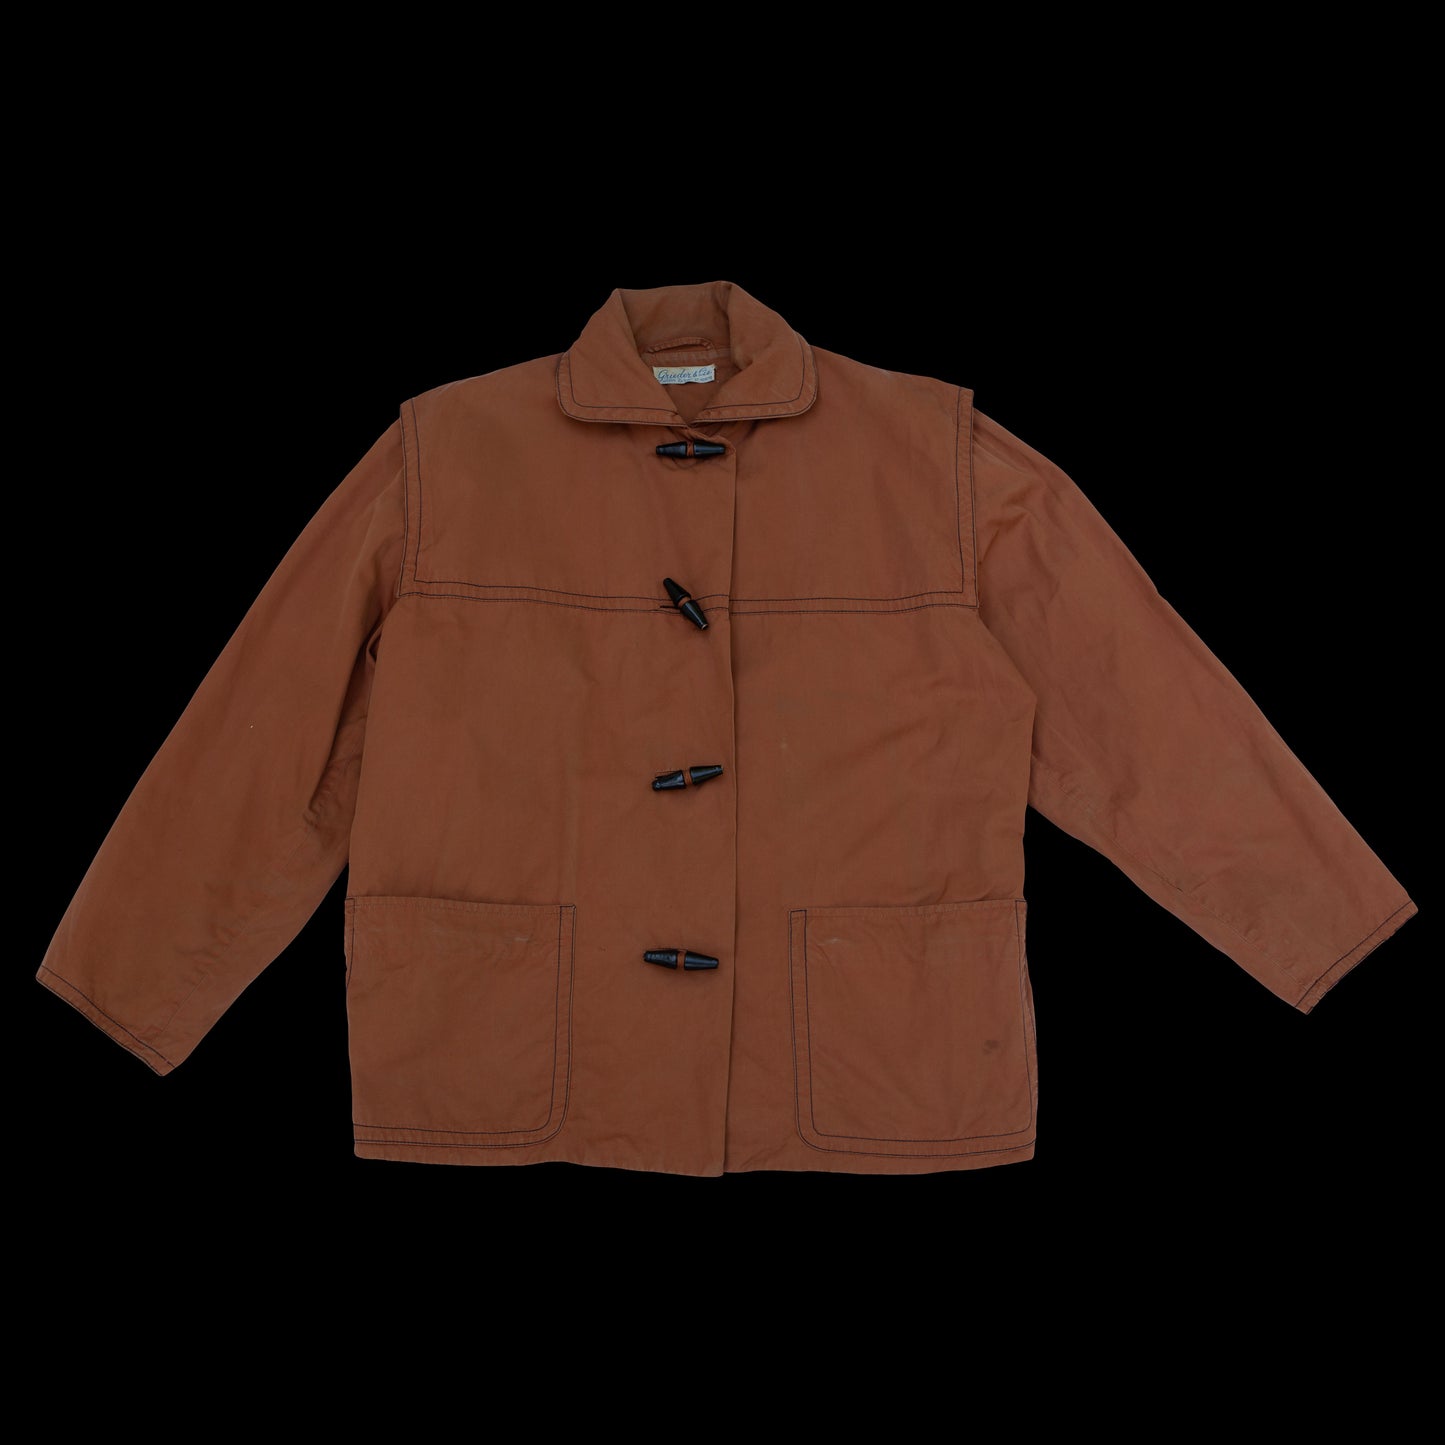 Vintage 1930s 1940s Rust Brown Cotton Gaberdine Toggle Button Jacket